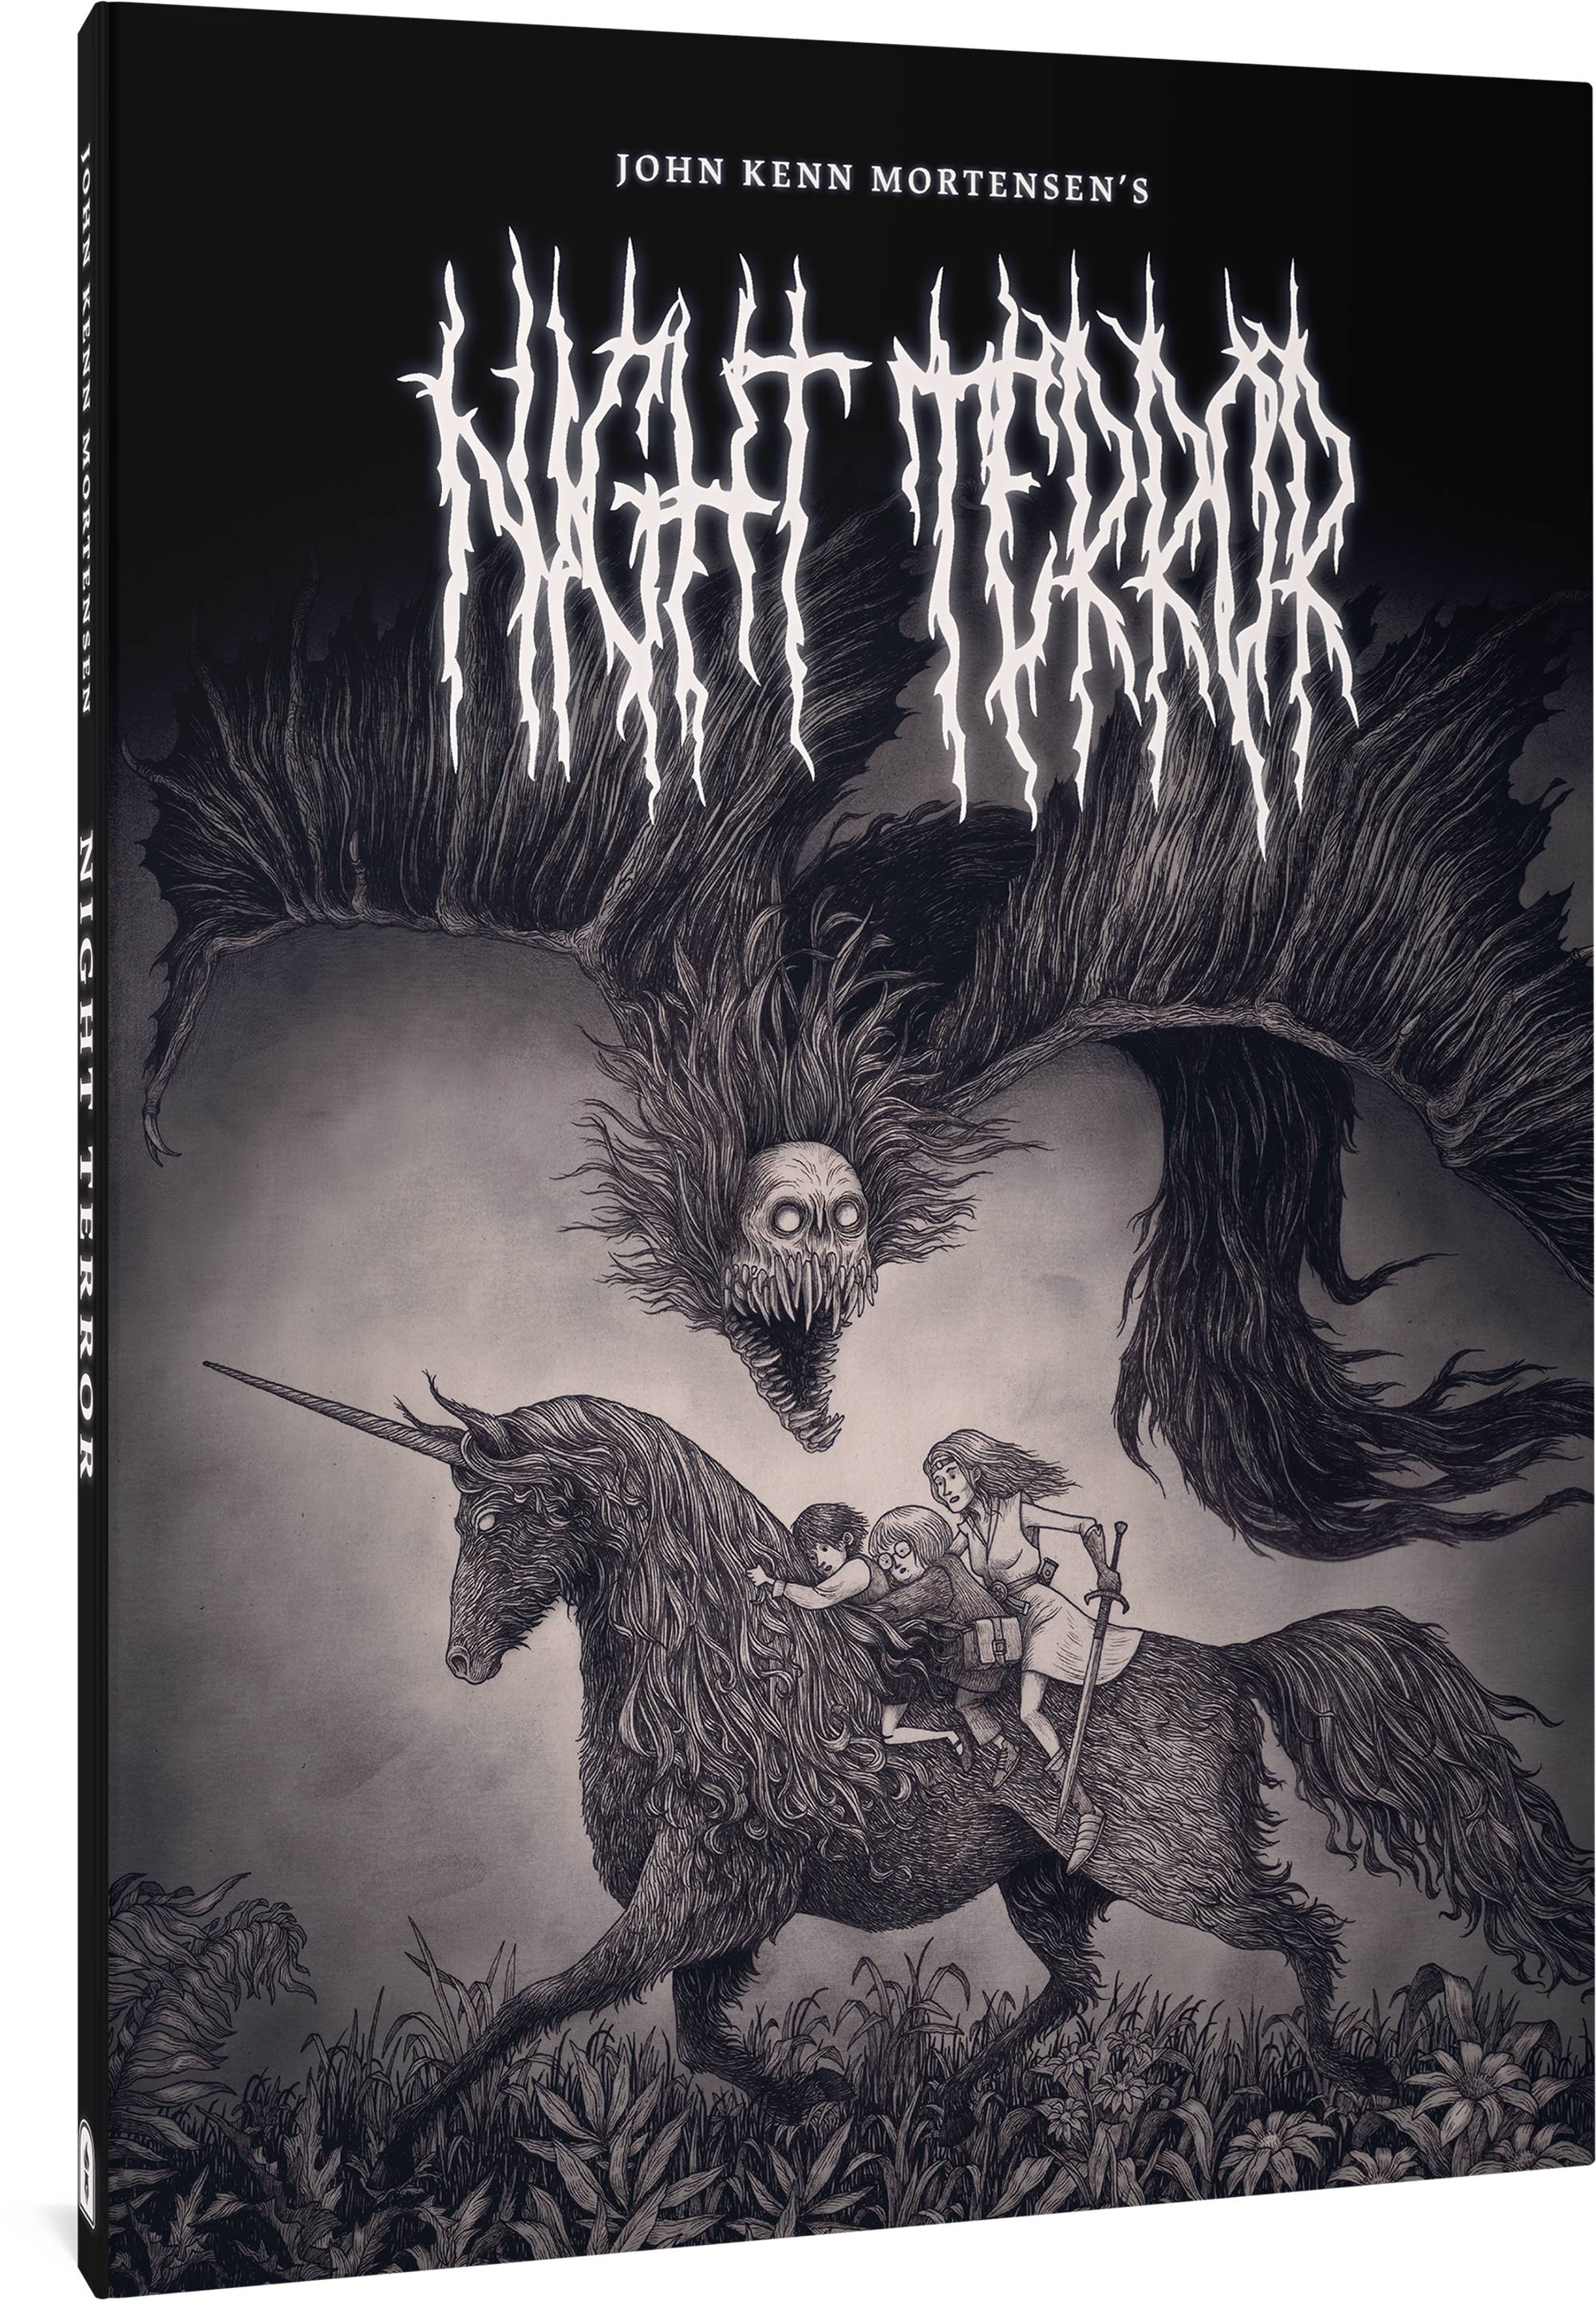 Night Terror Hardcover